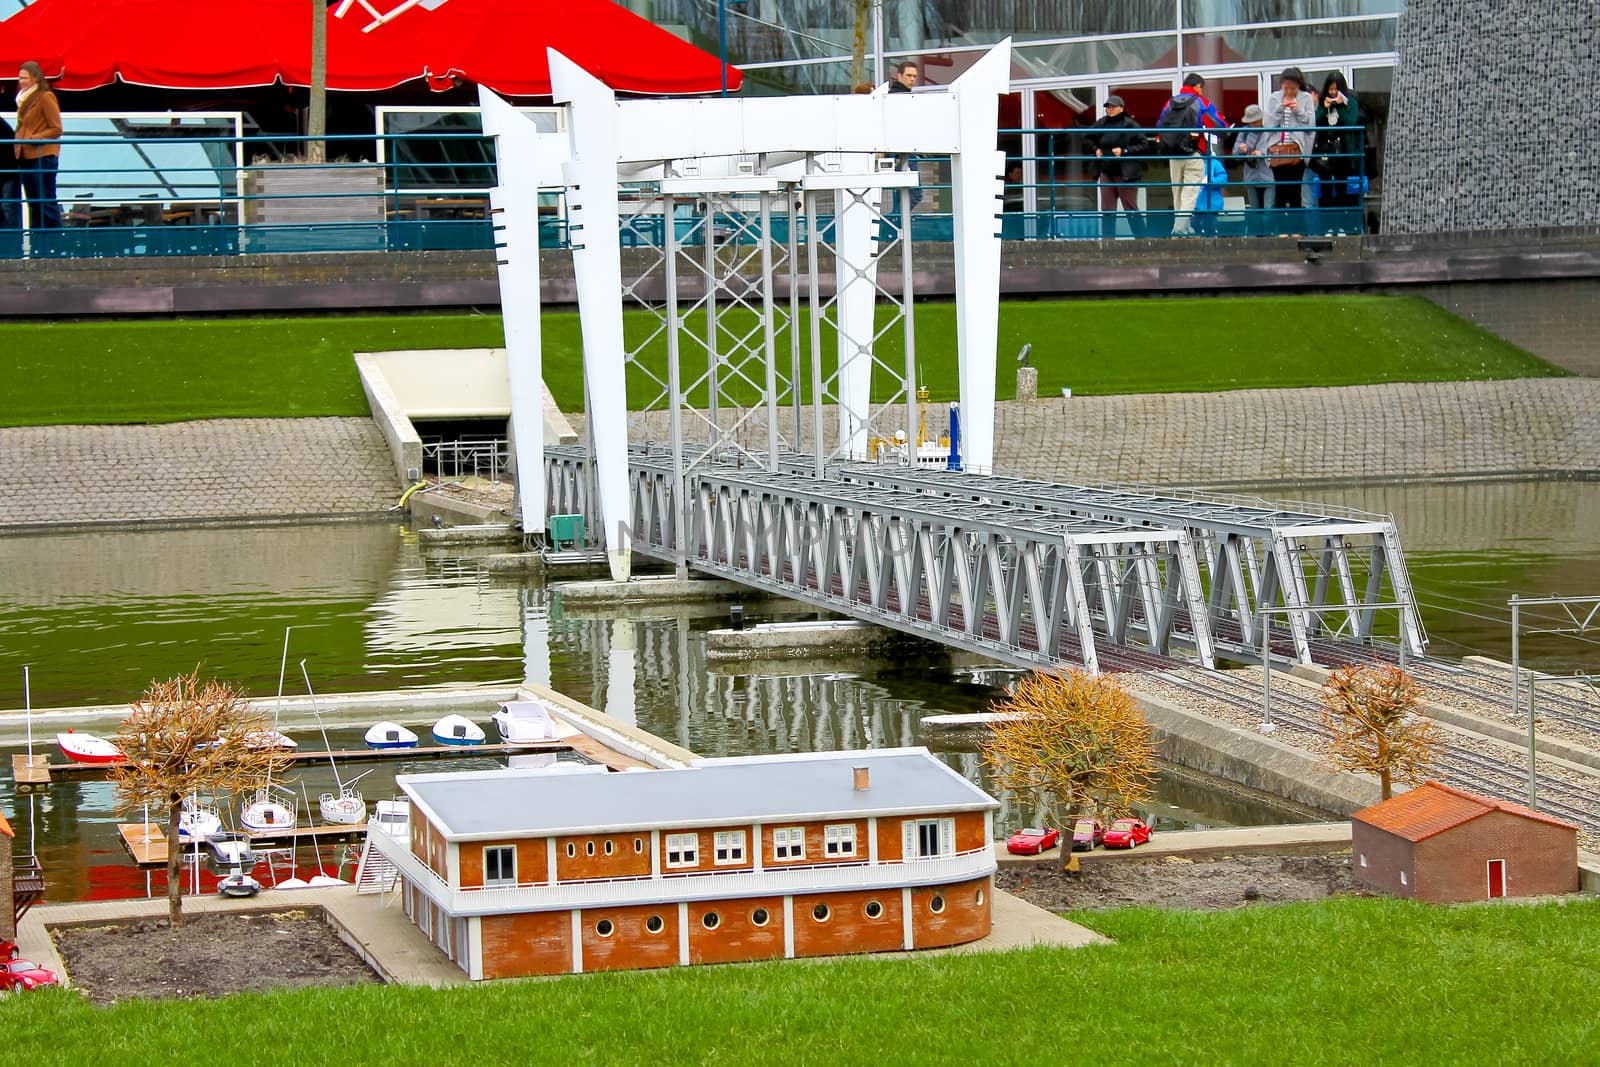 Miniature railway bridge in the park Madurodam. Netherlands, Den Haag